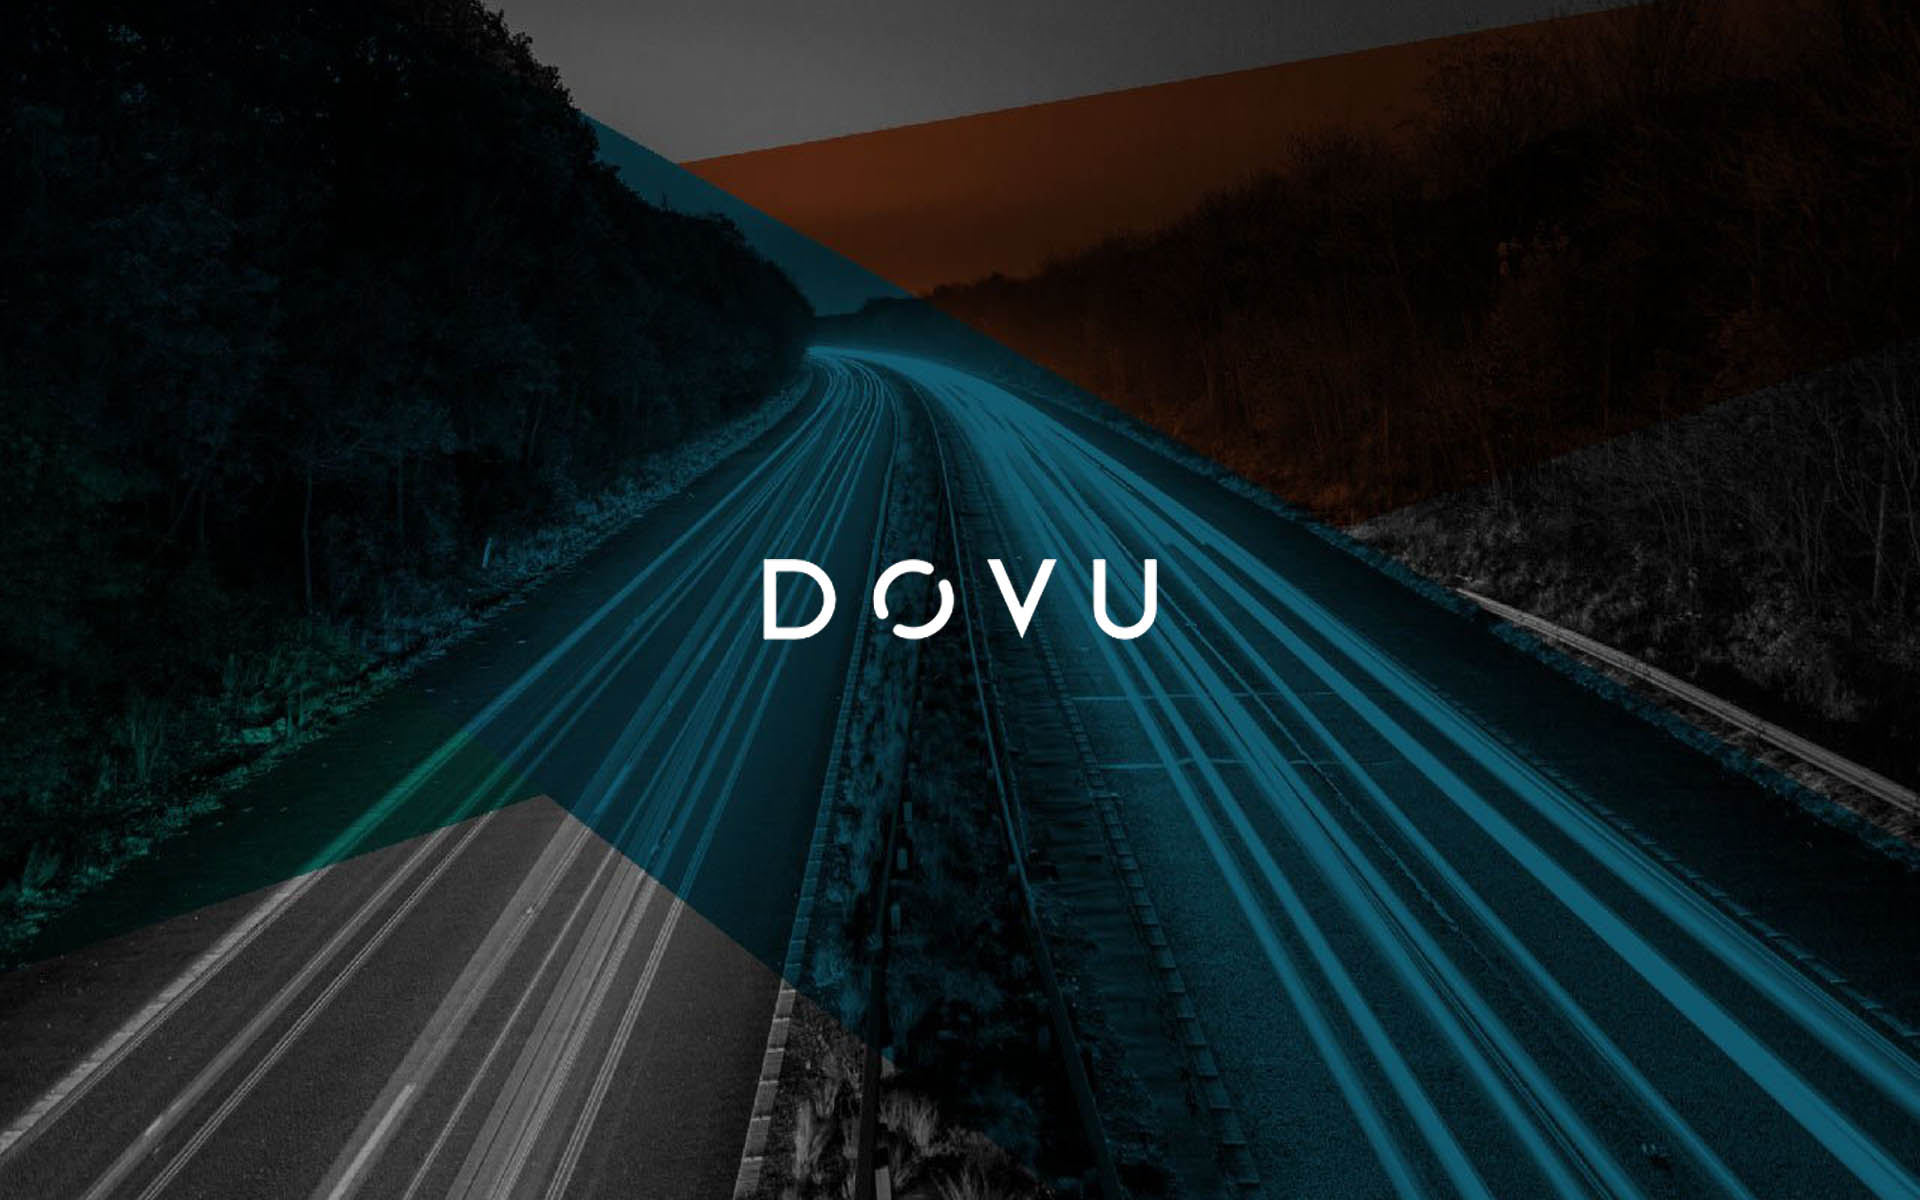 Expert on Blockchain-backed firms David Drake Joins DOVU Advisory Board